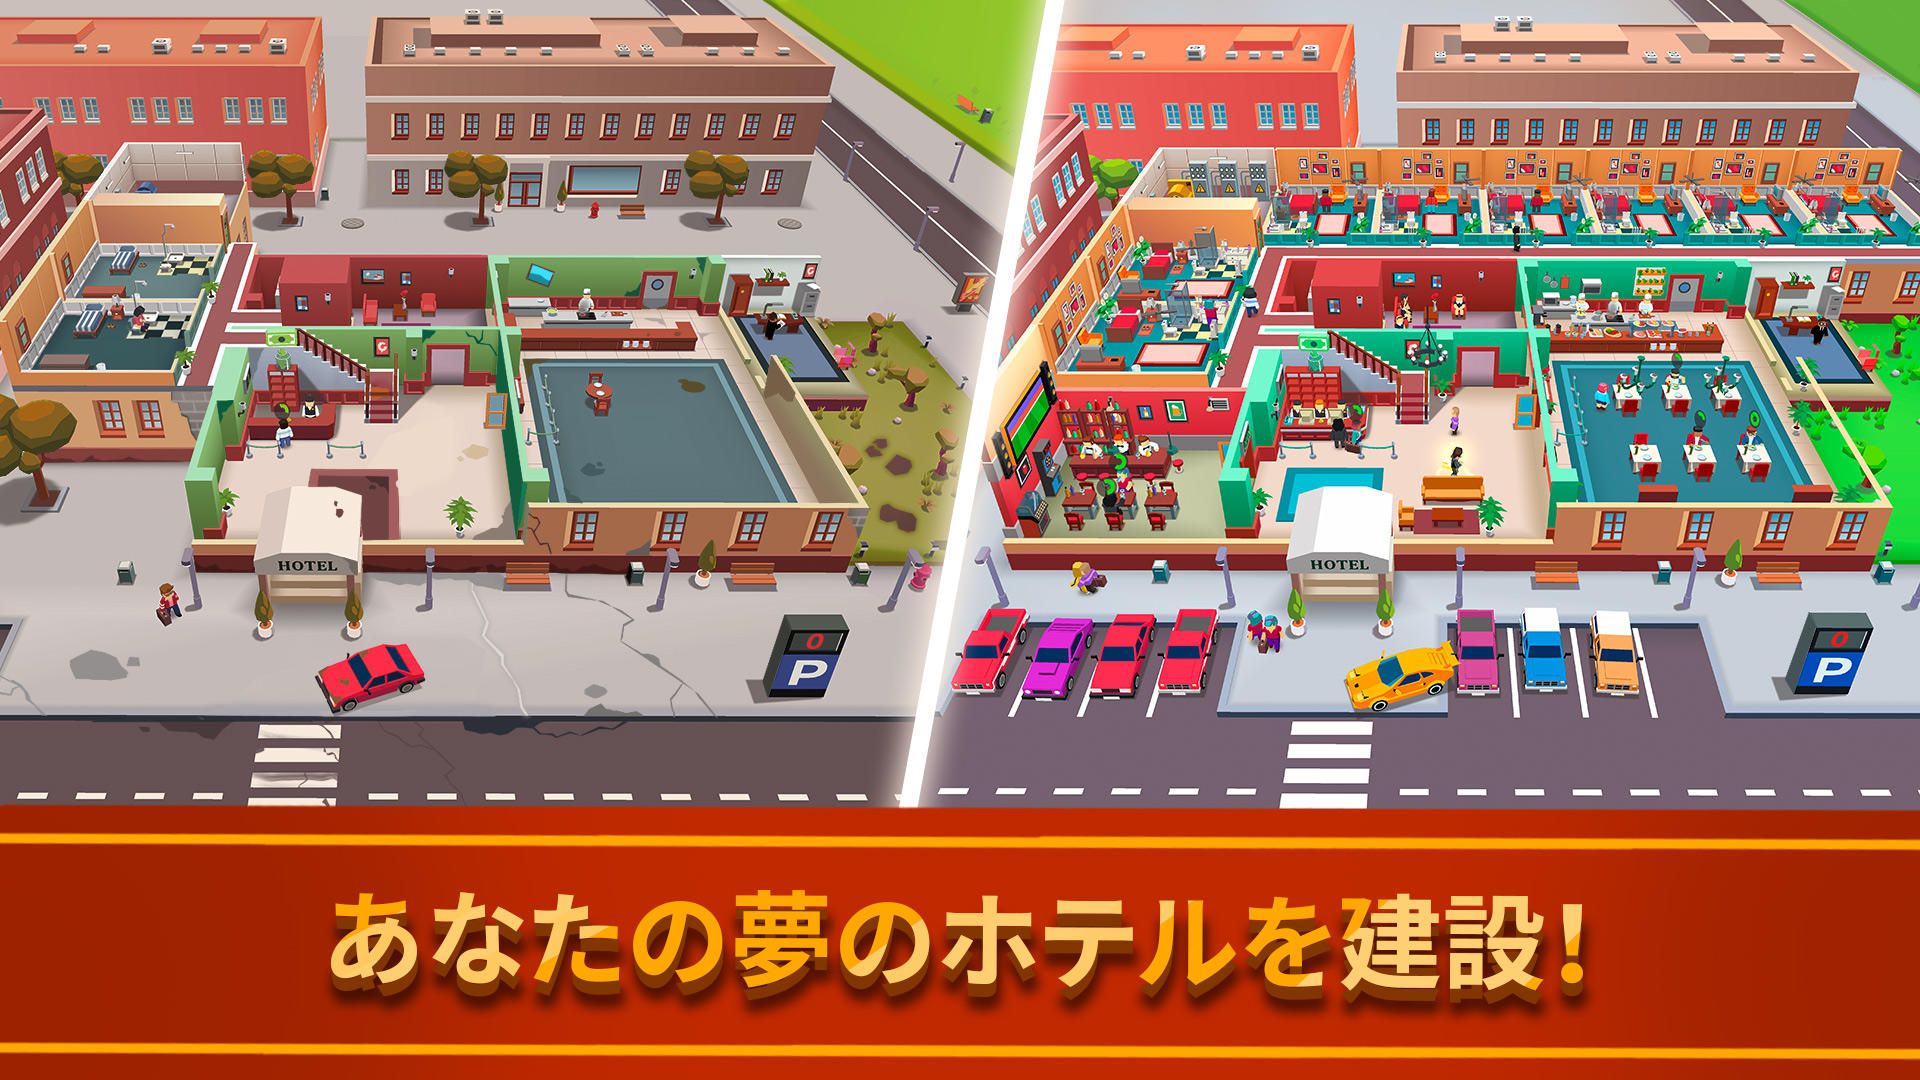 Screenshot 1 of ホテルエンパイヤタイクーン;放置;ゲーム 3.21